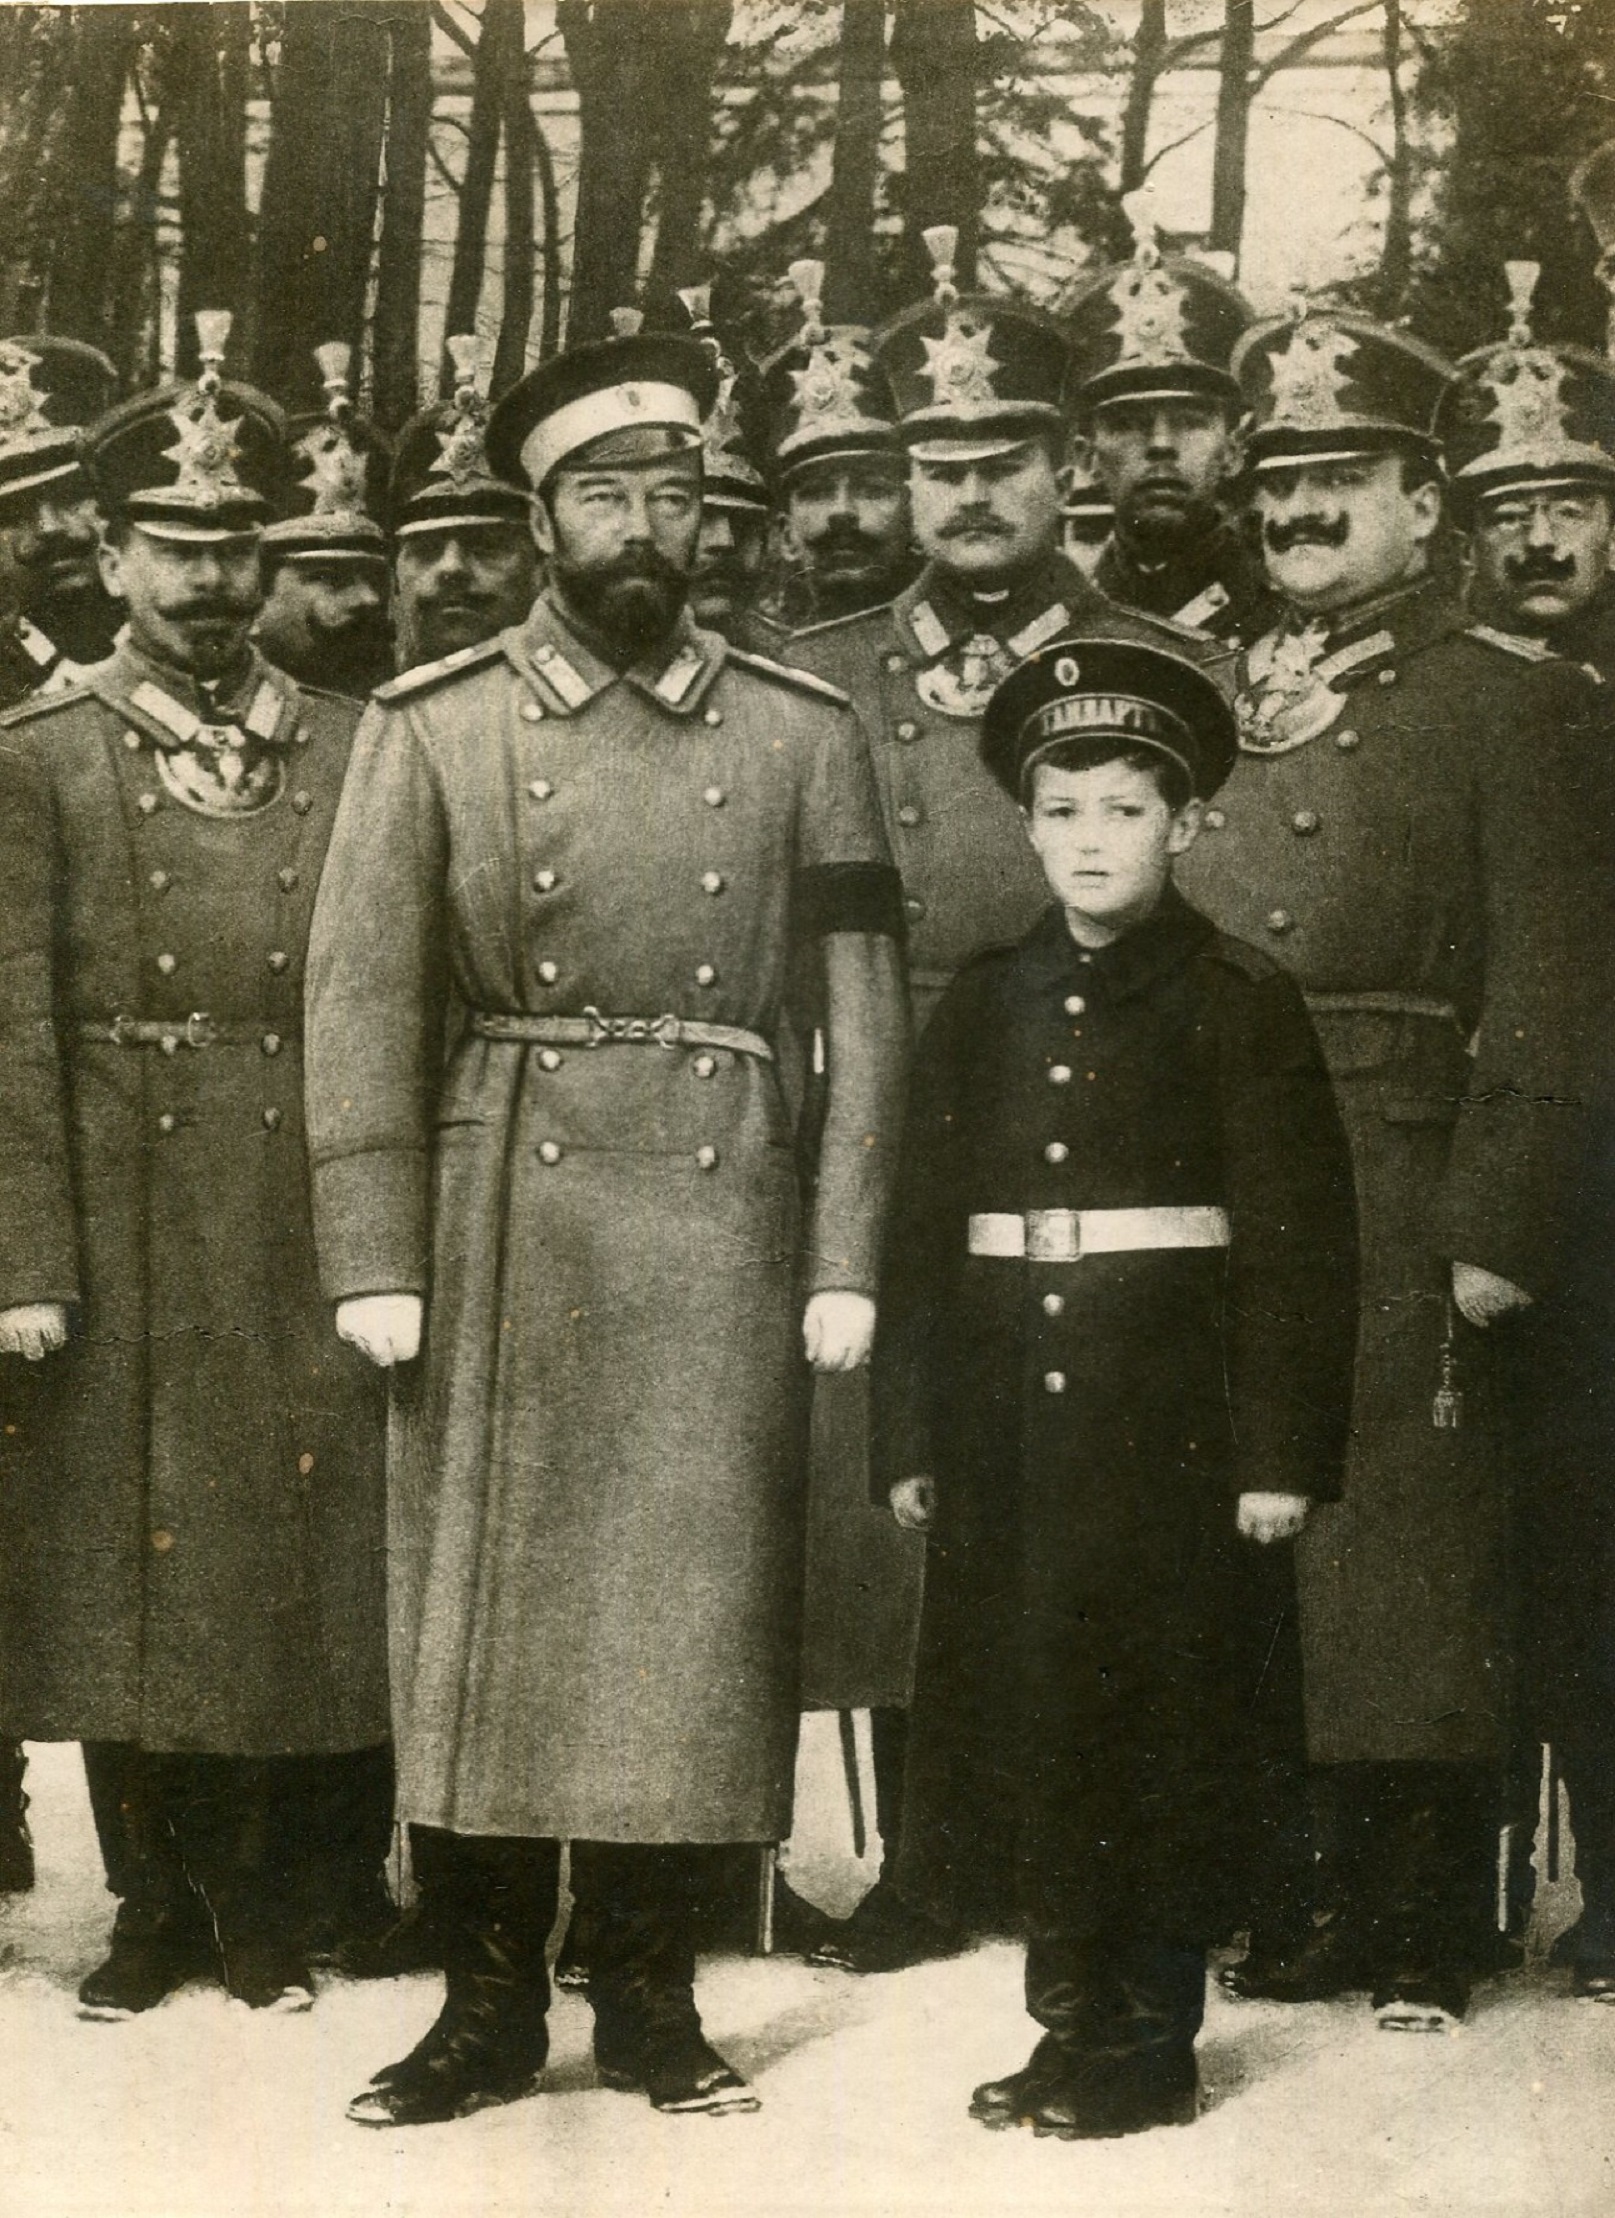 [NICHOLAS II & TSAREVICH ALEXEI]: Nicholas II (1868-1918) Emperor of Russia 1894-1917,